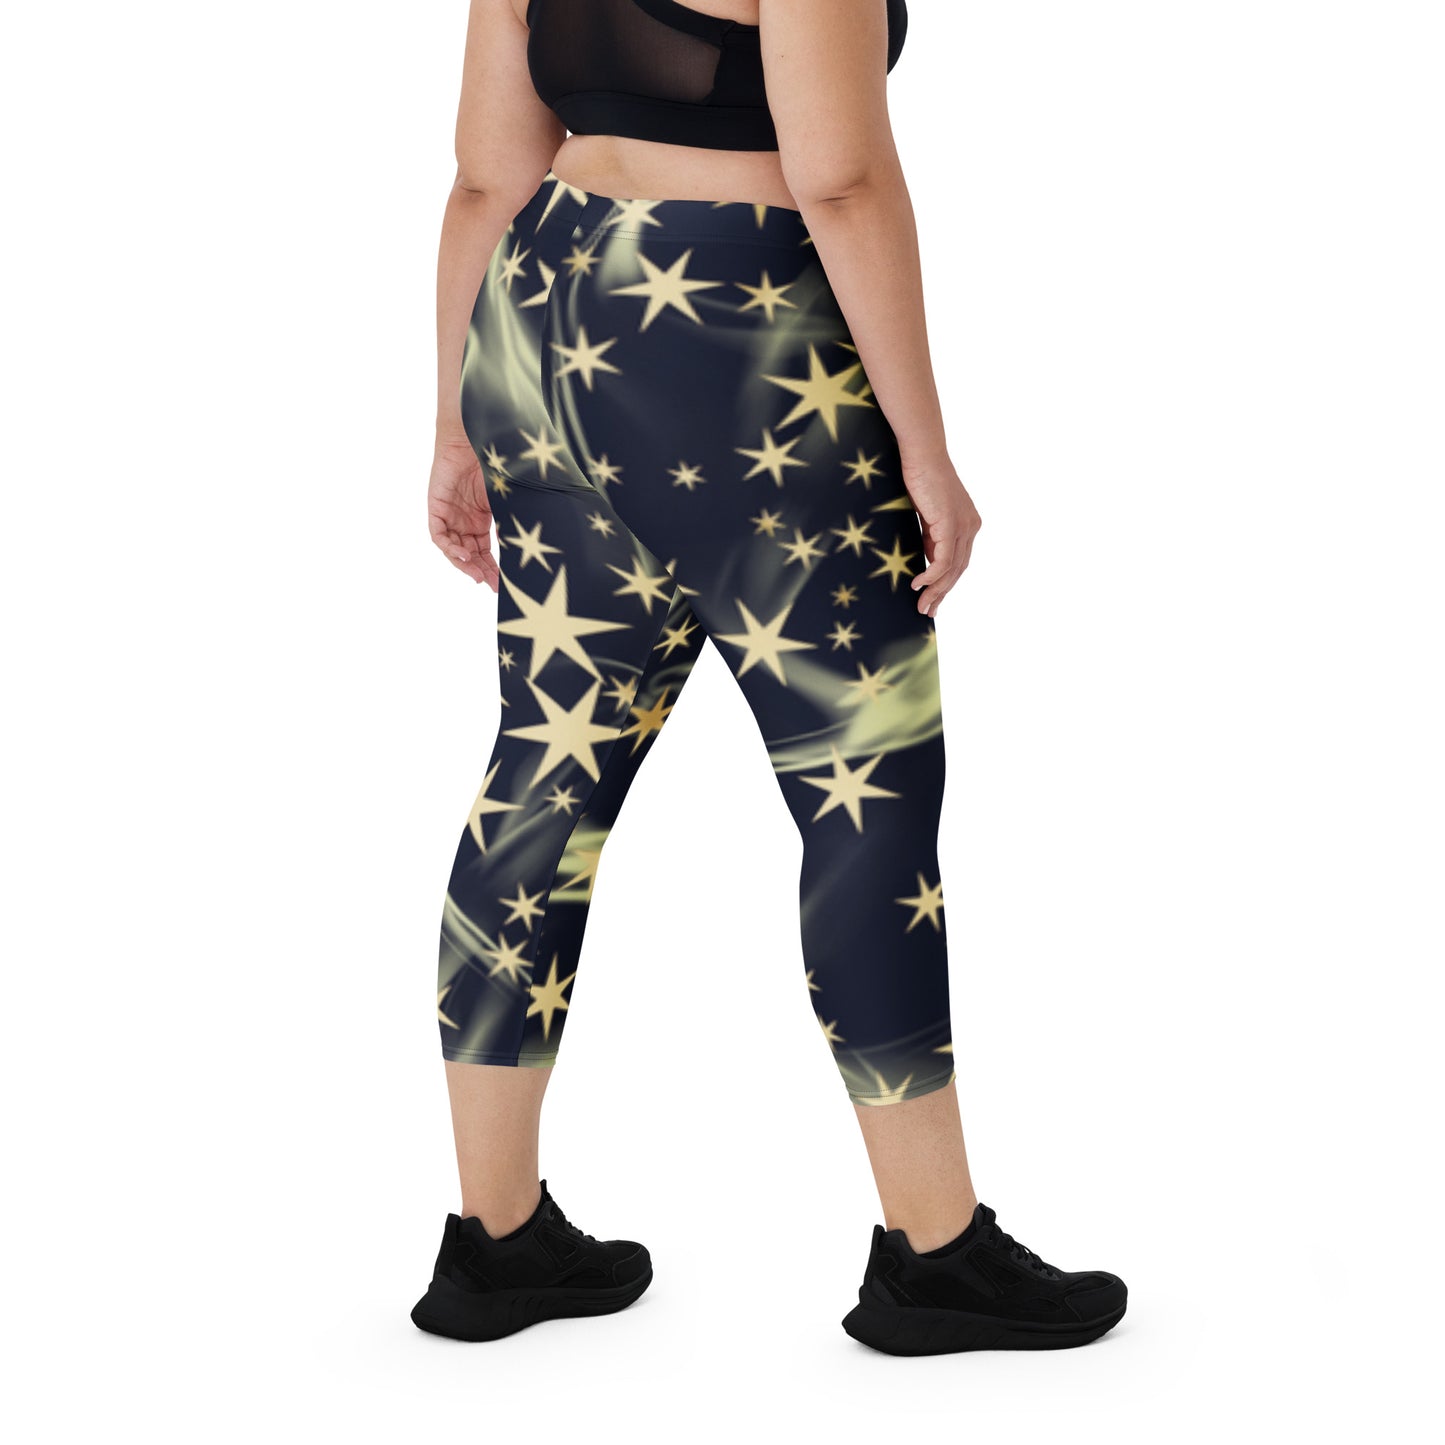 "Stars" capri leggings